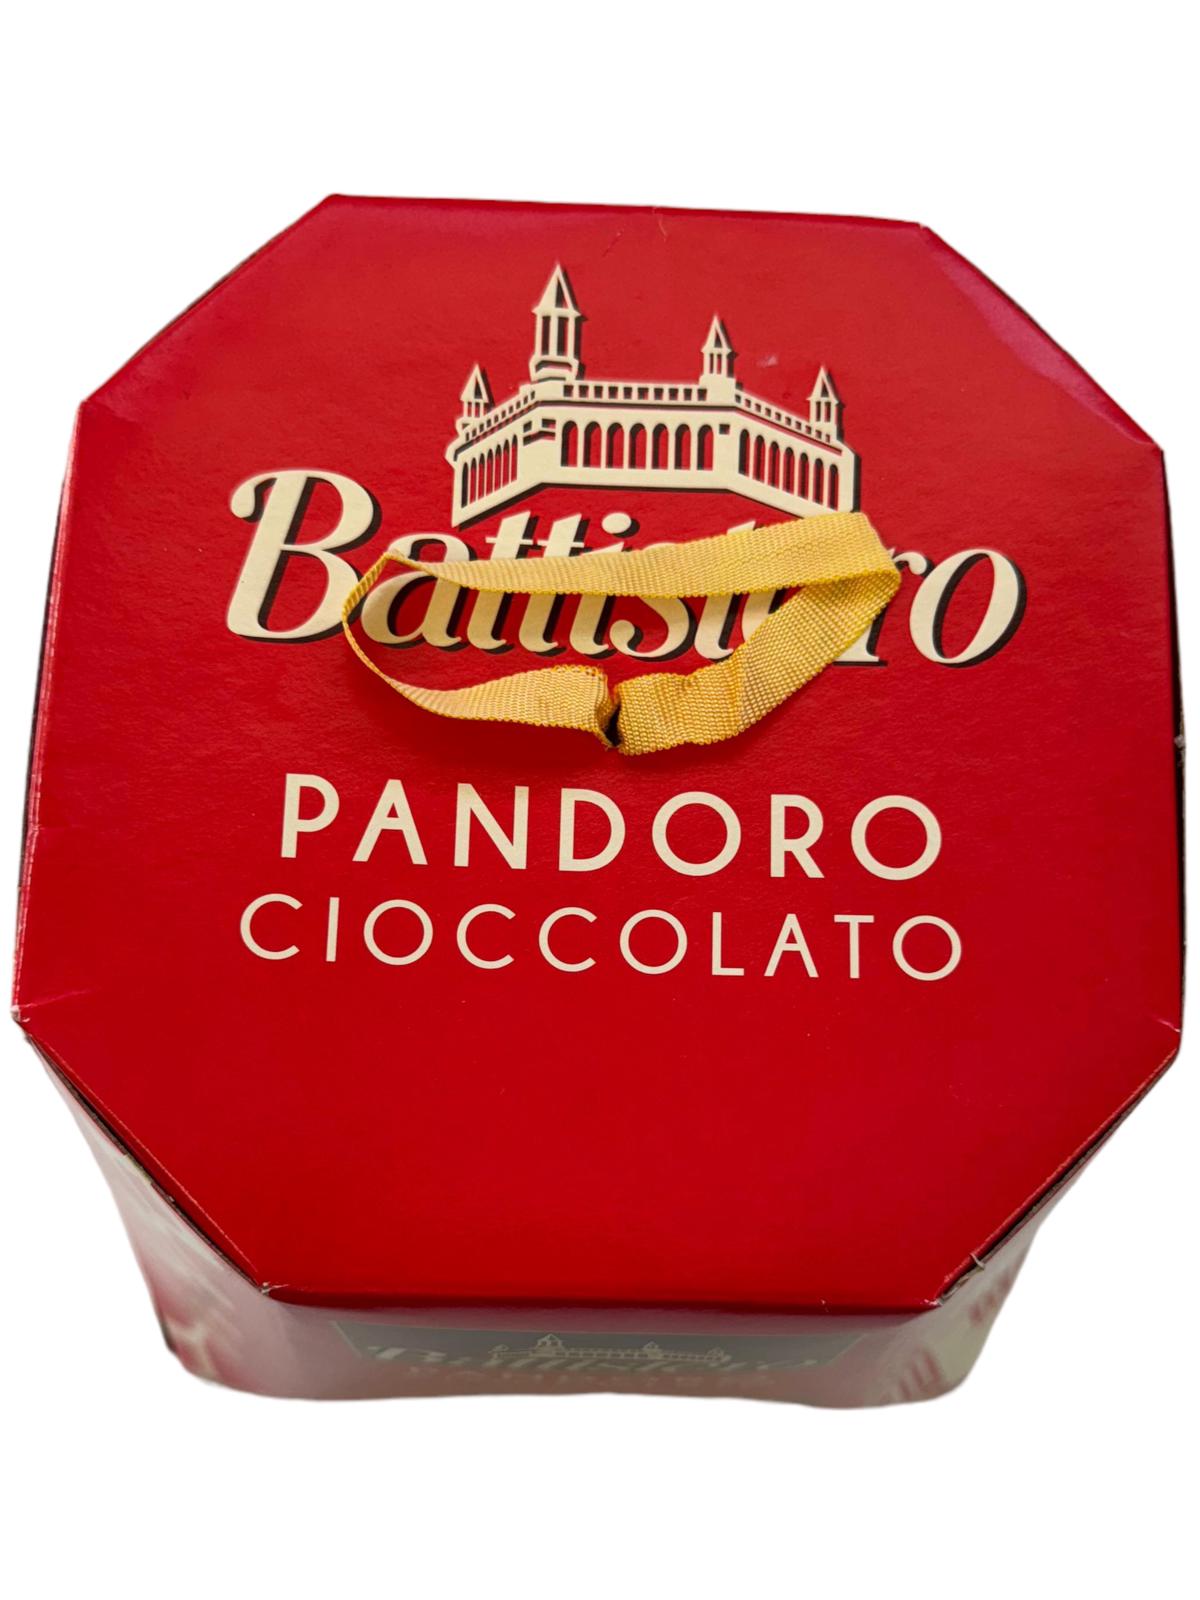 Battisero Cioccolato Panettone Italian Chocolate Cake 750g